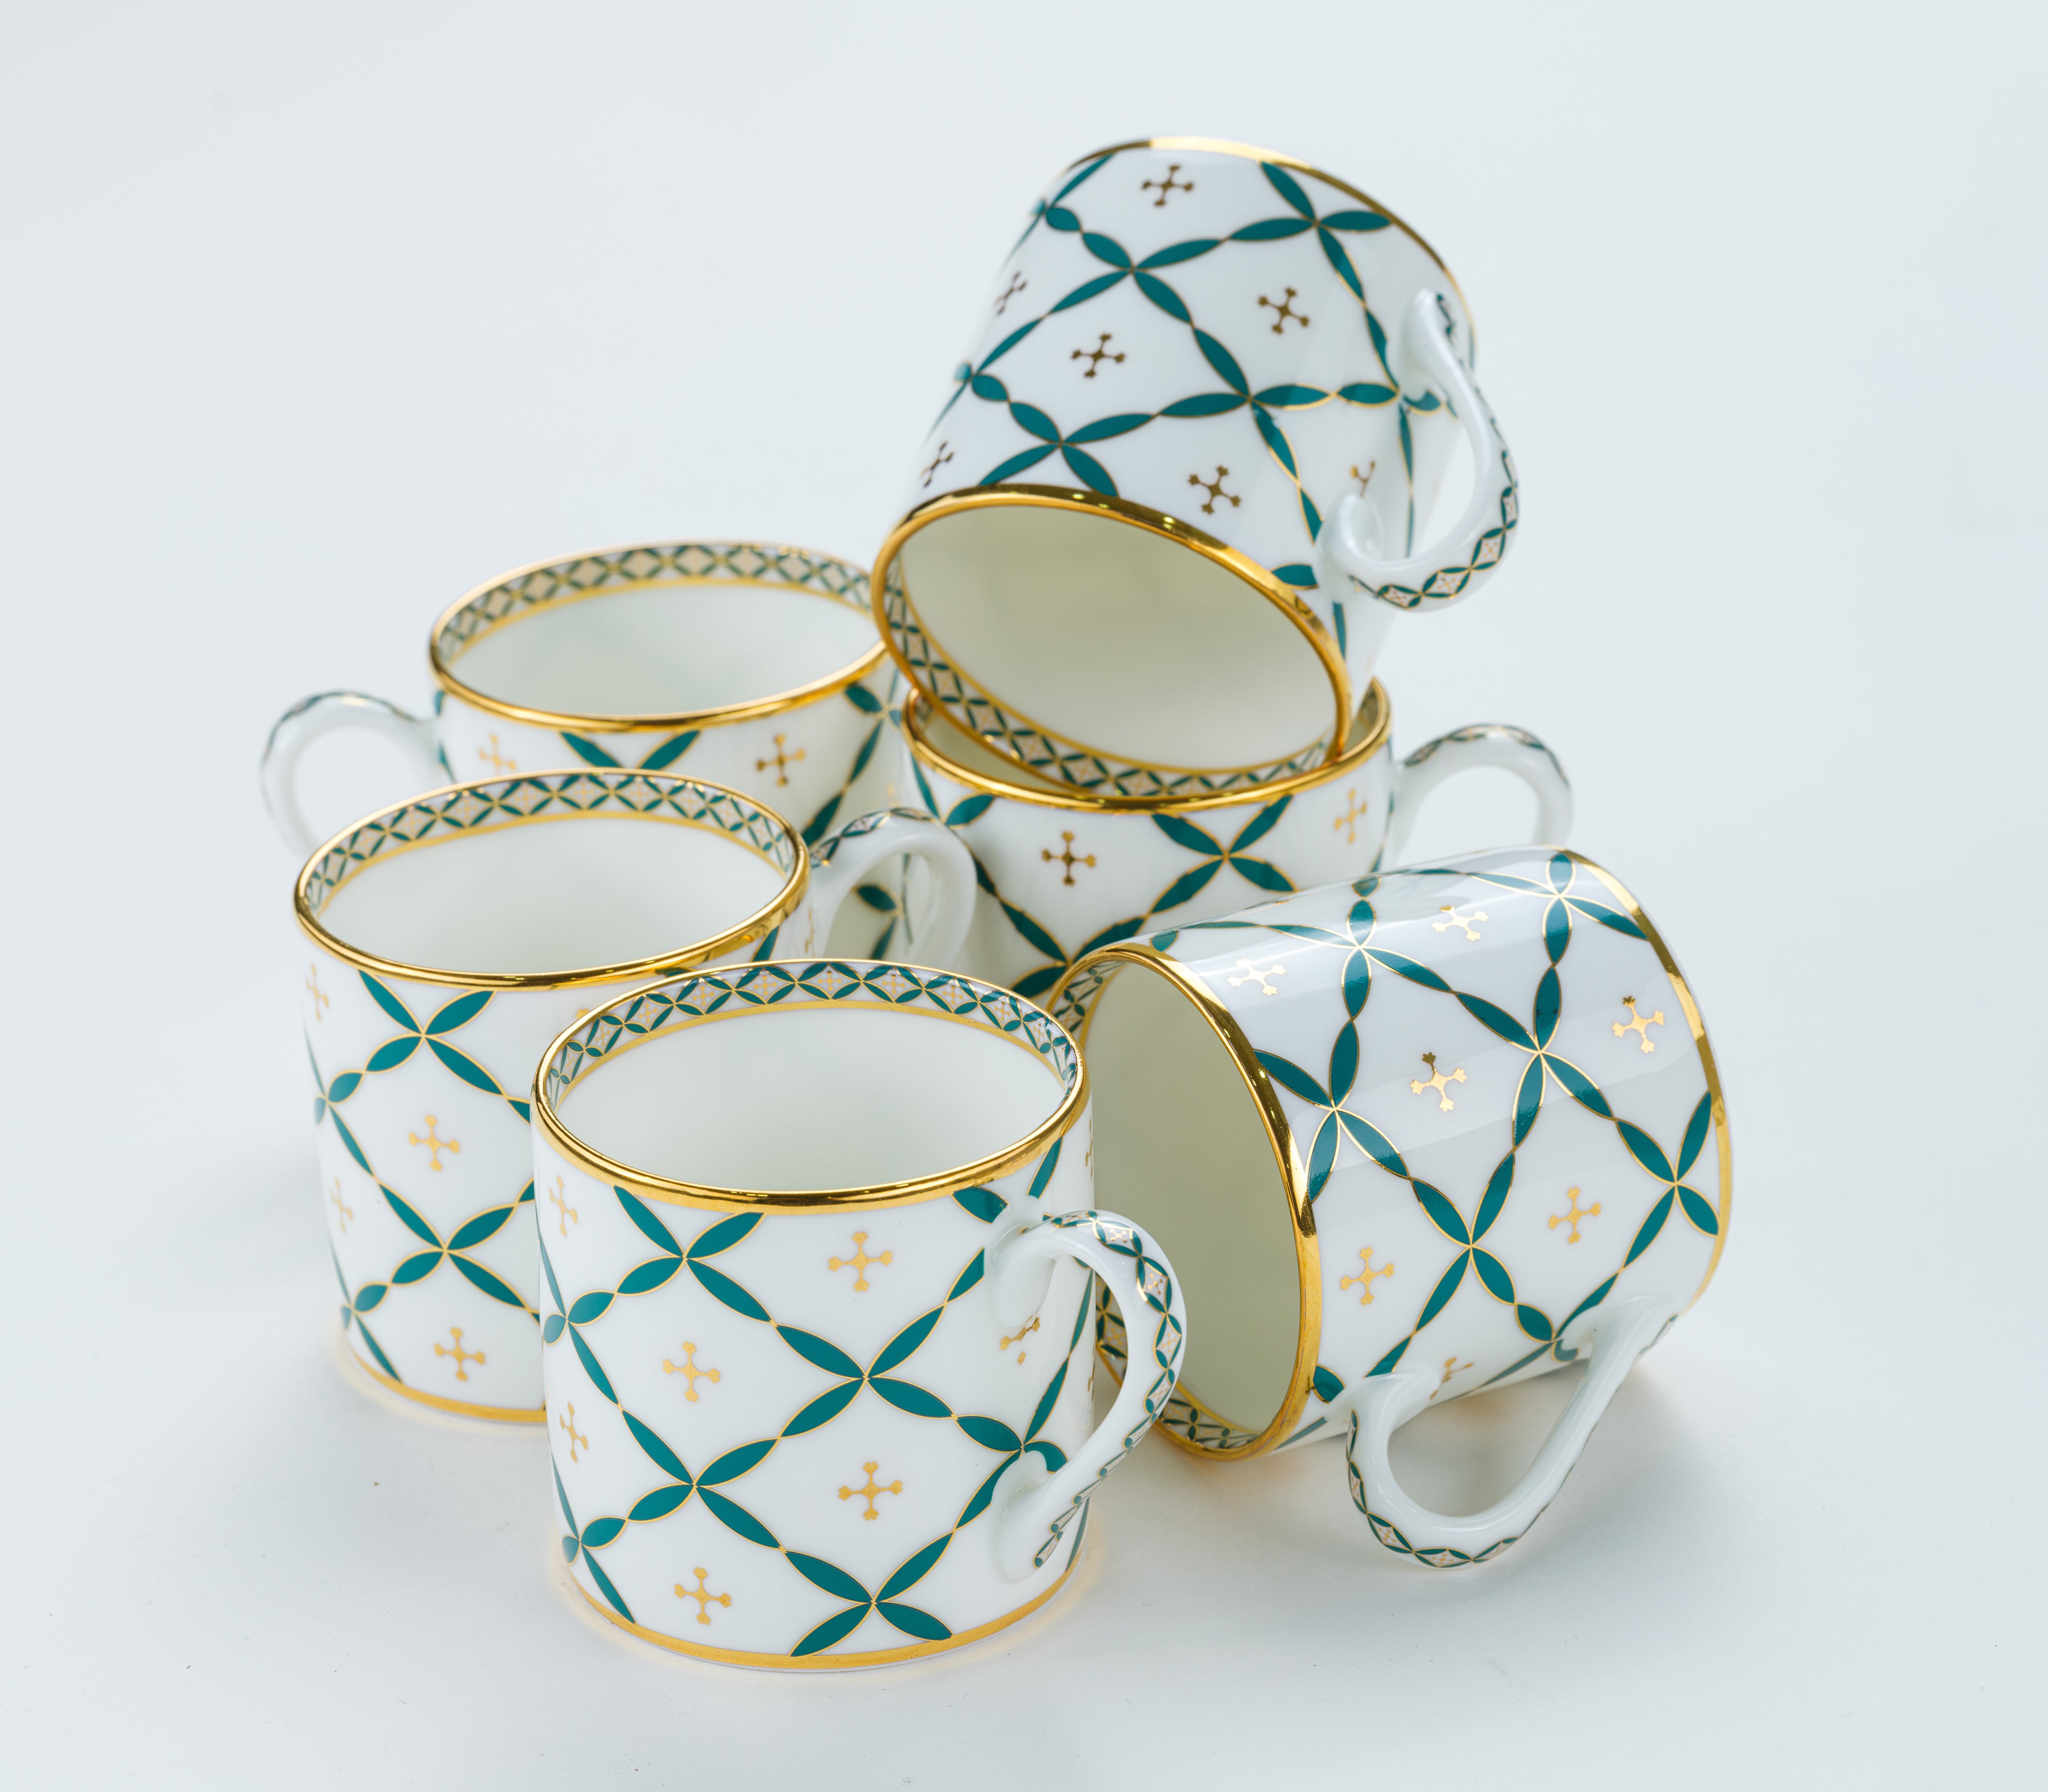 GOLDGIFTIDEAS Silver Plated Brass Antique Cup Saucer Set of 6, Wedding Gift